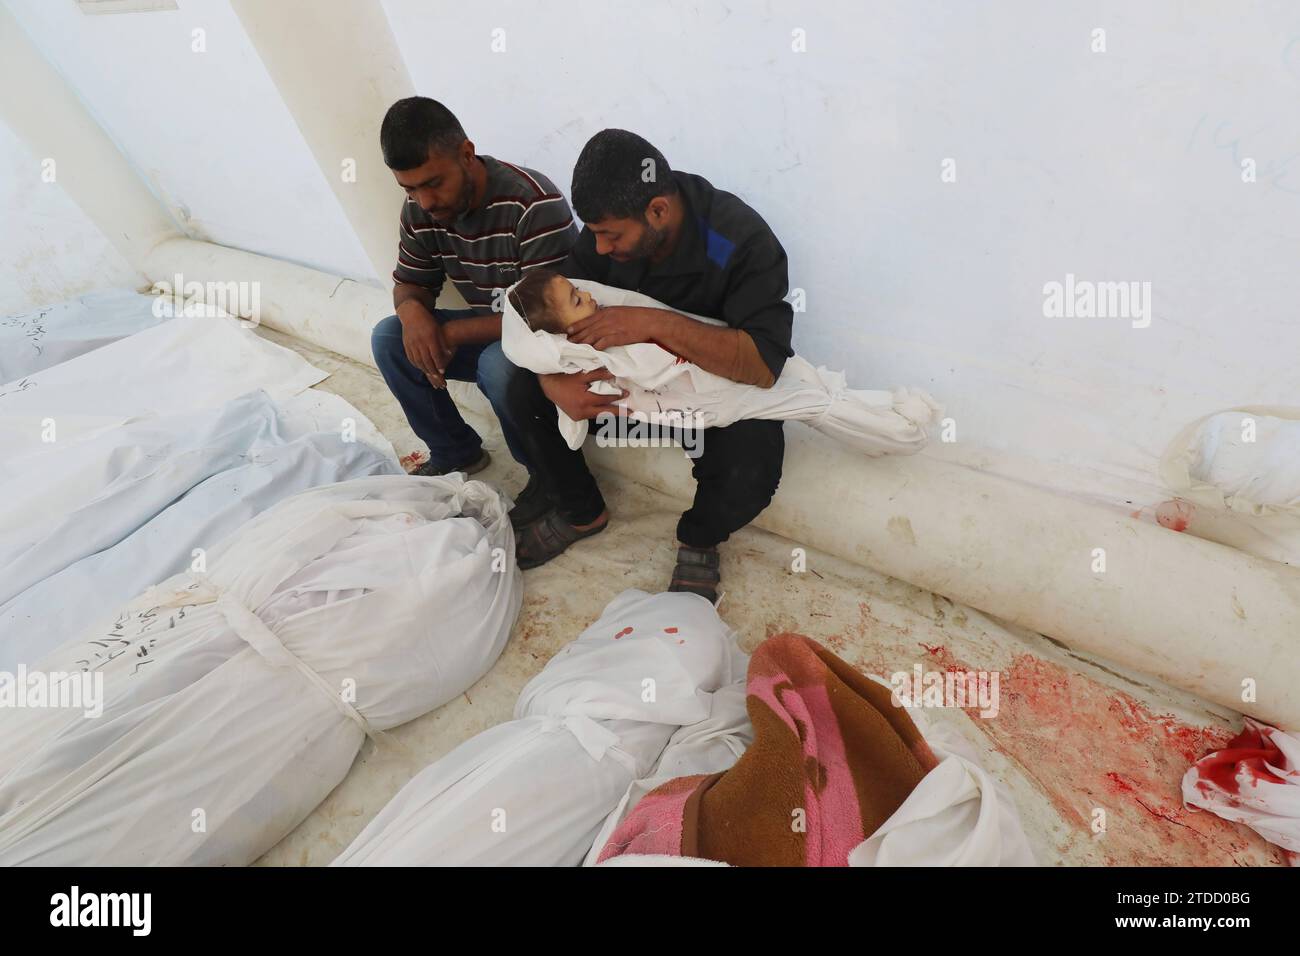 https://c8.alamy.com/comp/2TDD0BG/people-mourn-as-they-collect-the-bodies-of-palestinians-killed-in-airstrikes-people-mourn-as-they-collect-the-bodies-of-palestinians-killed-in-airstrikes-on-december-18-2023-at-al-aqsa-hospital-in-dair-el-balah-gaza-strip-photo-by-omar-ashtawy-apaimages-dair-el-balah-gaza-strip-palestinian-territory-181223-dair-el-balah-osh-0013-copyright-xapaimagesxomarxashtawyxxapaimagesx-2TDD0BG.jpg